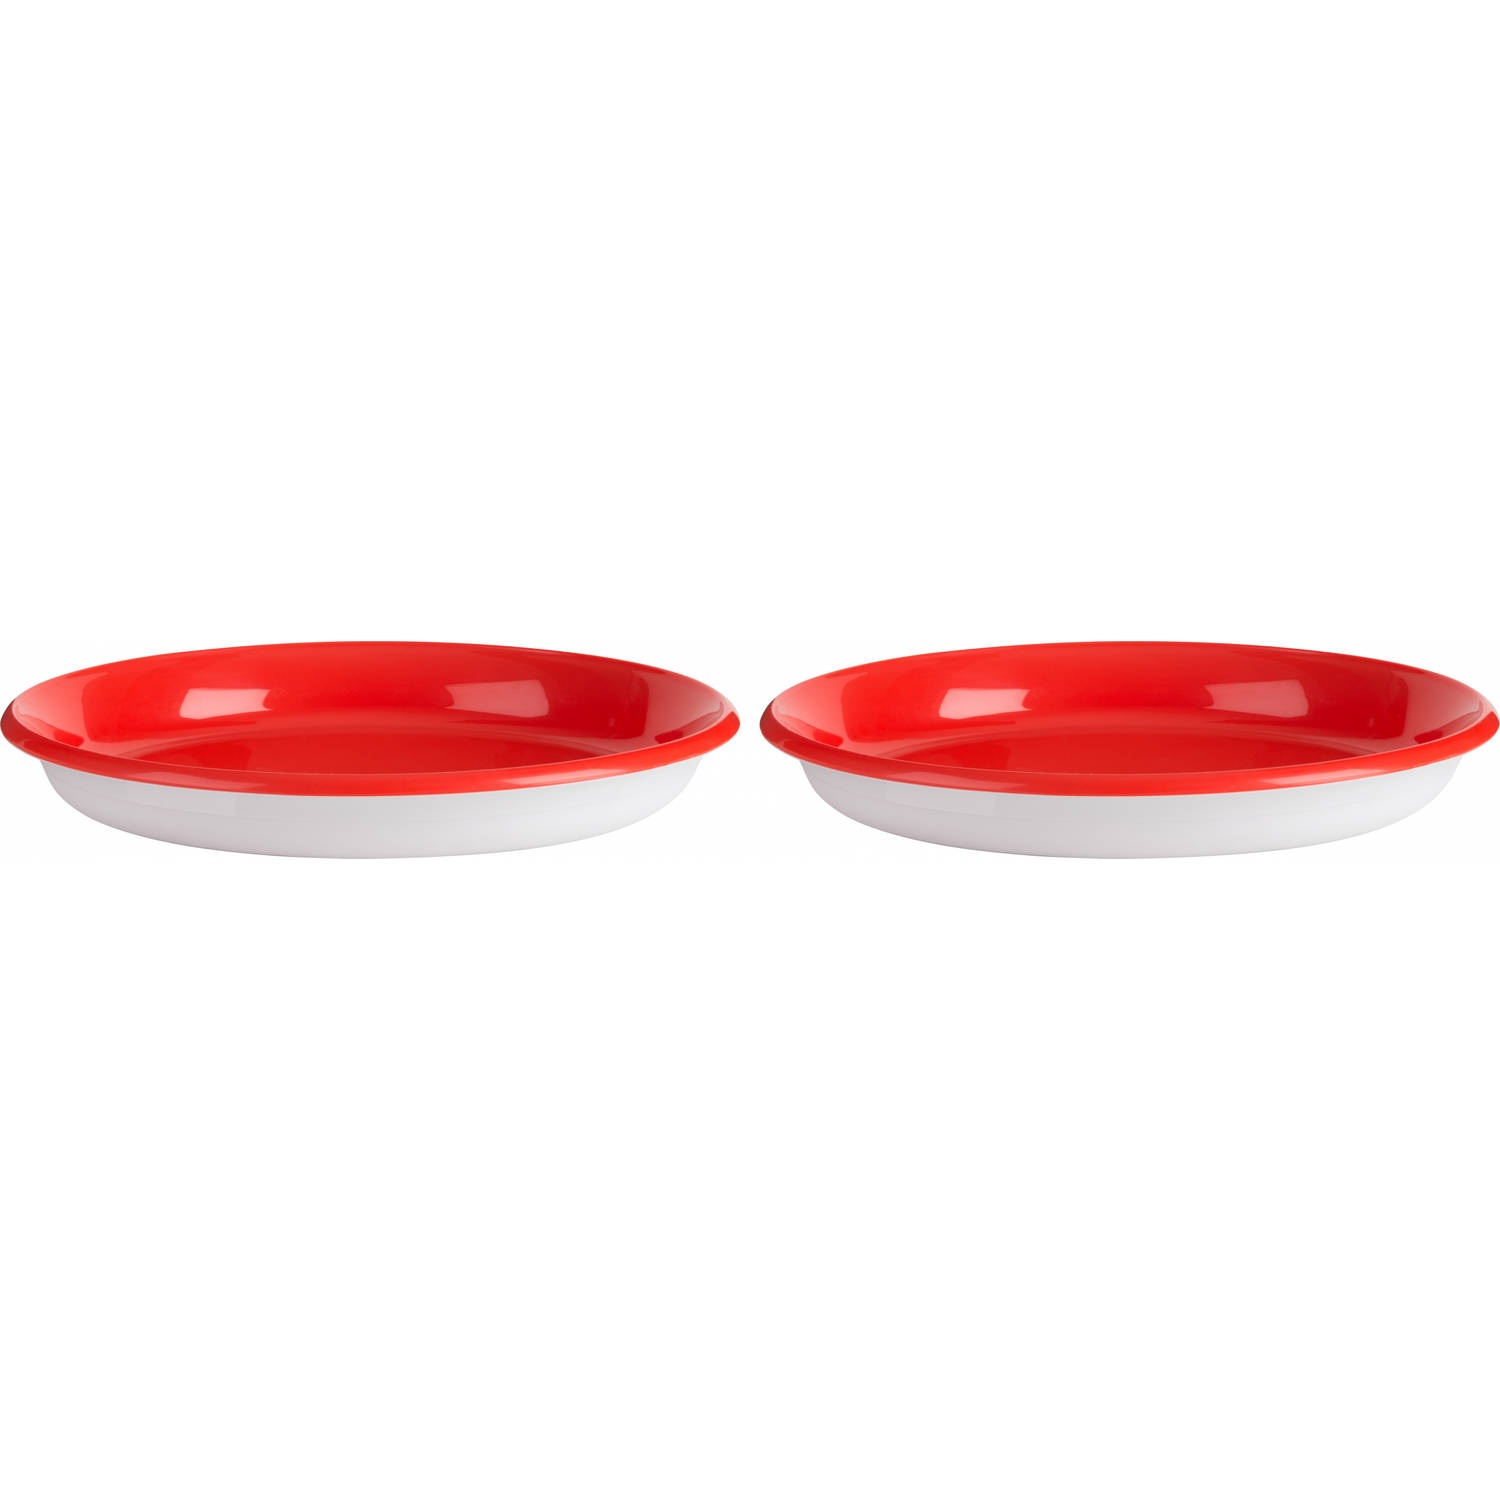 Trudeau borden Leon plat 21 cm polypropyleen rood/wit 2 stuks